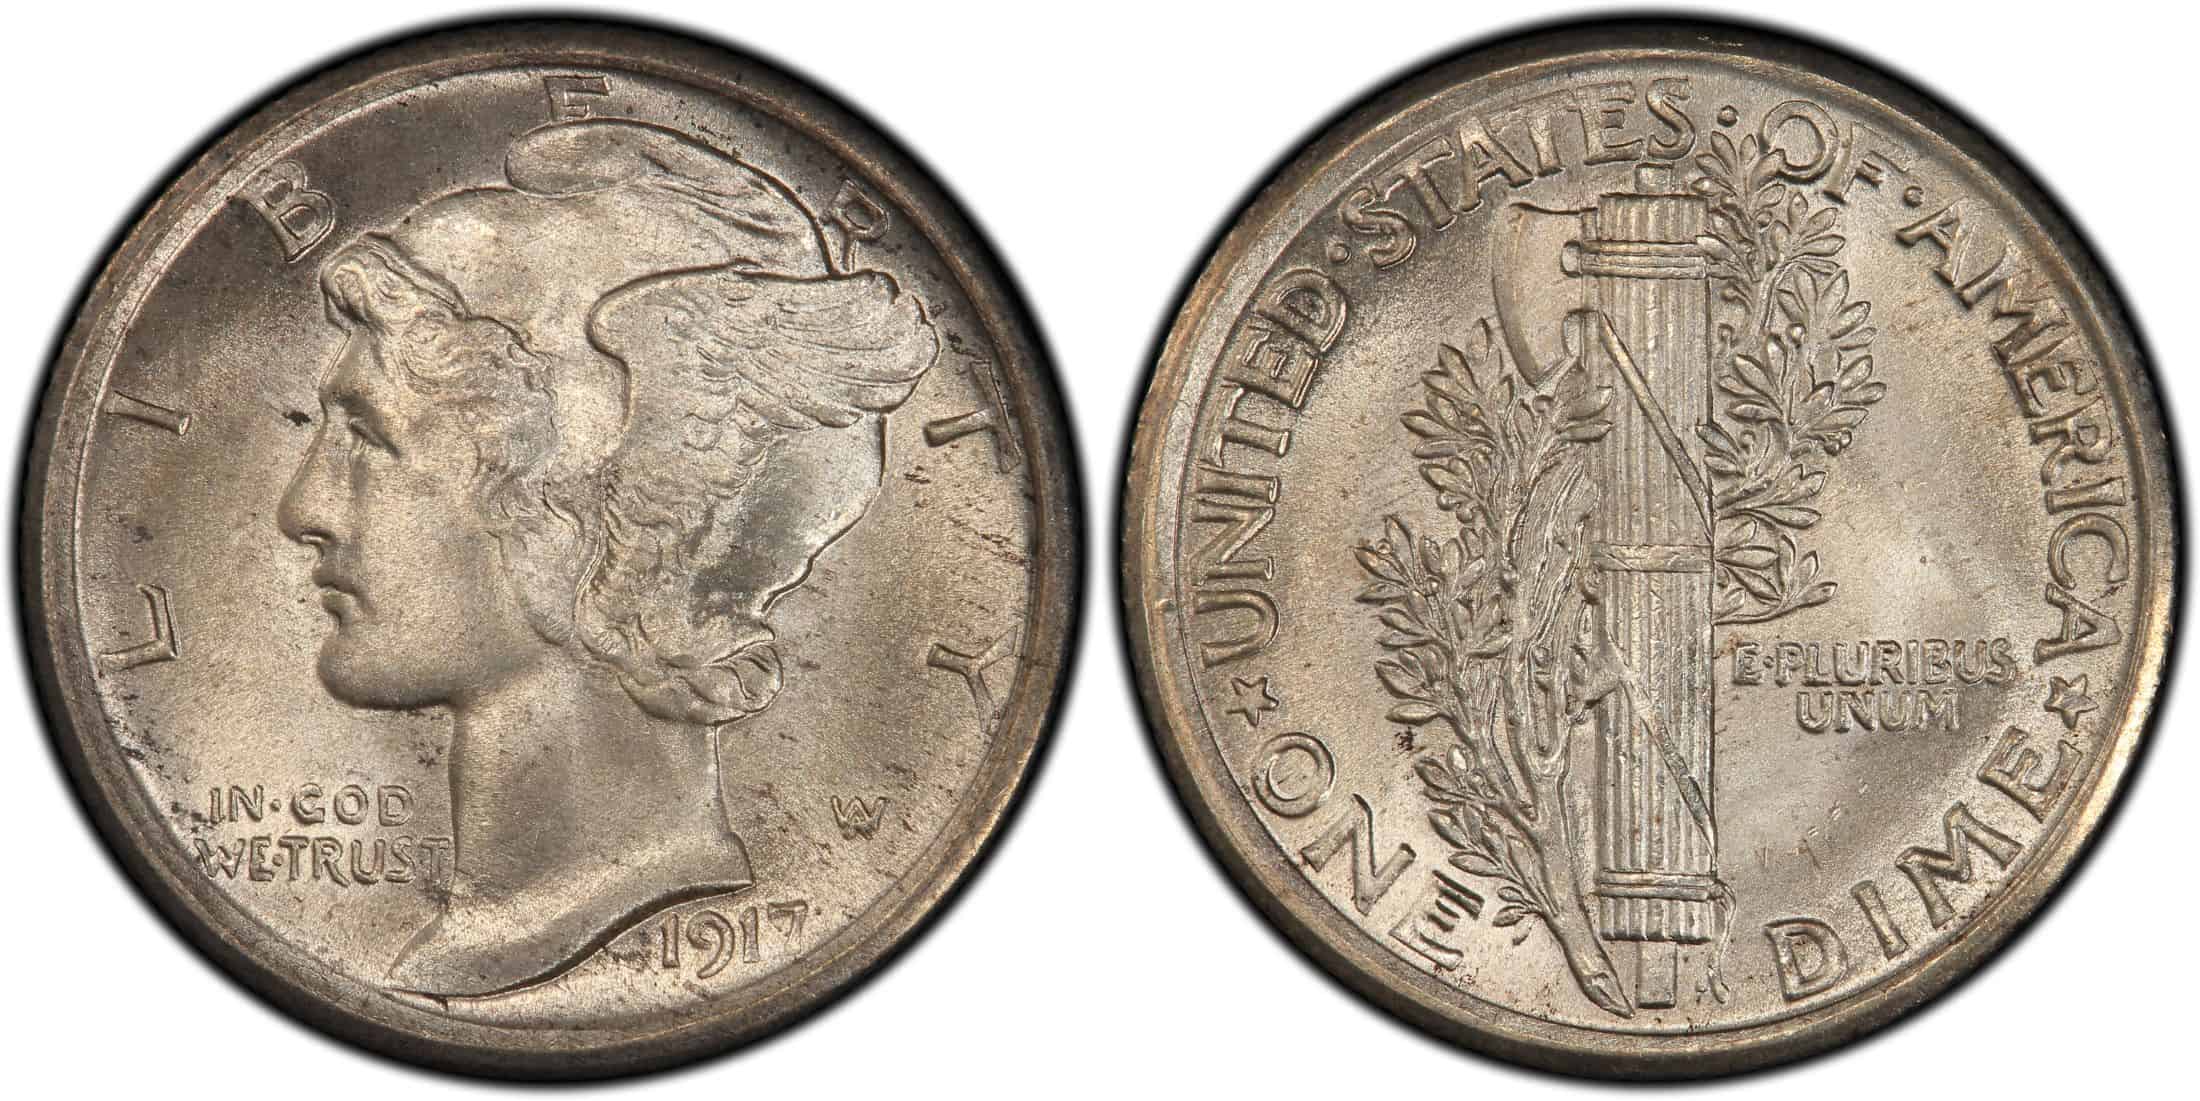 1917 Mercury dime without a mint mark